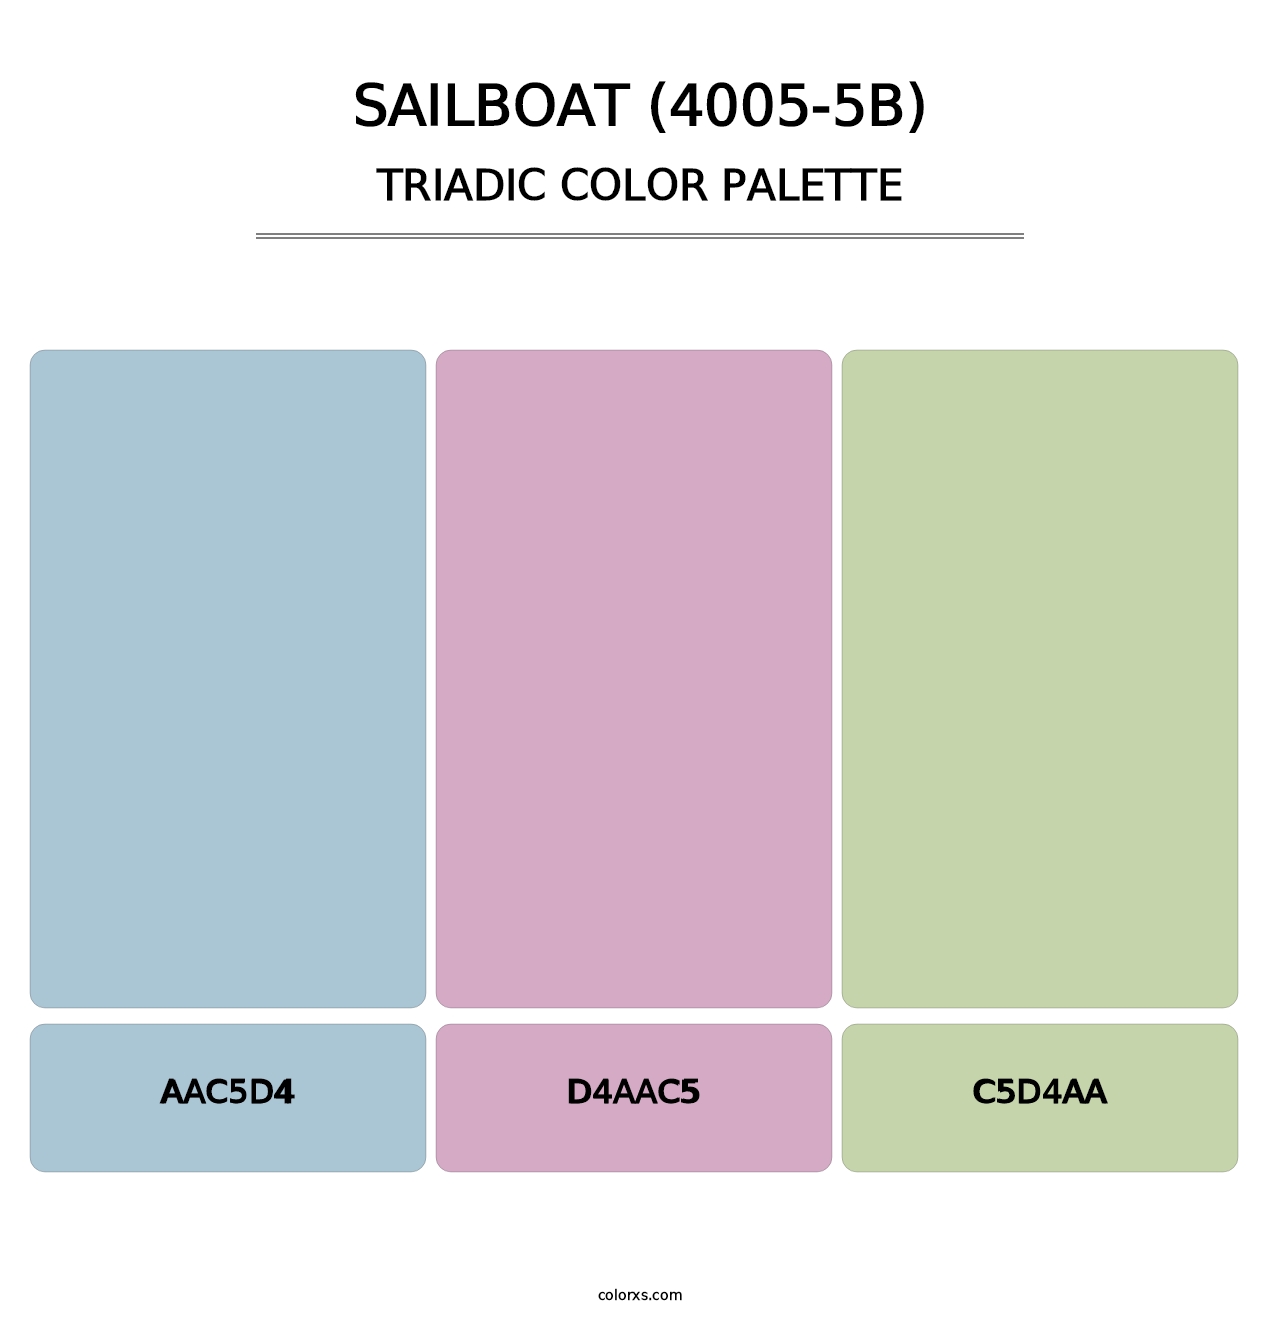 Sailboat (4005-5B) - Triadic Color Palette